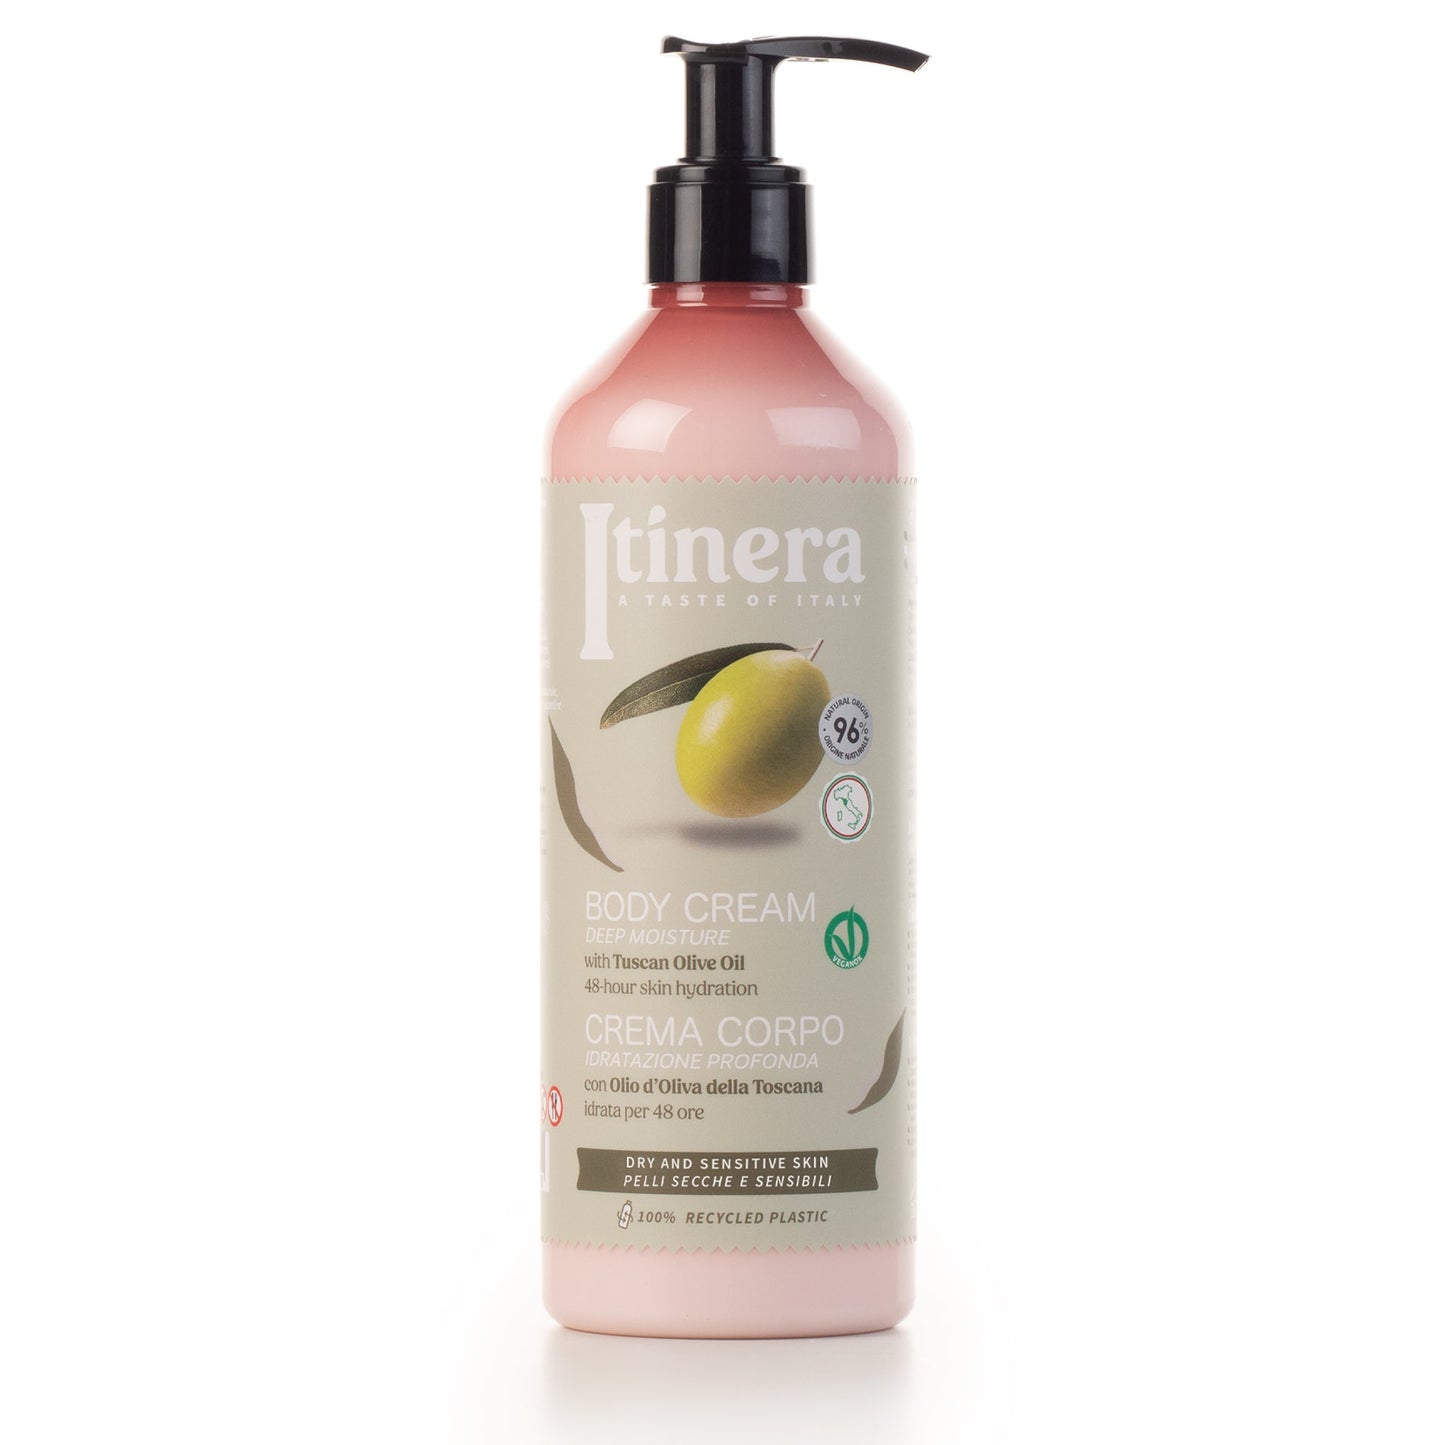 Itinera Hair & Body Bundle - Dolce Vita